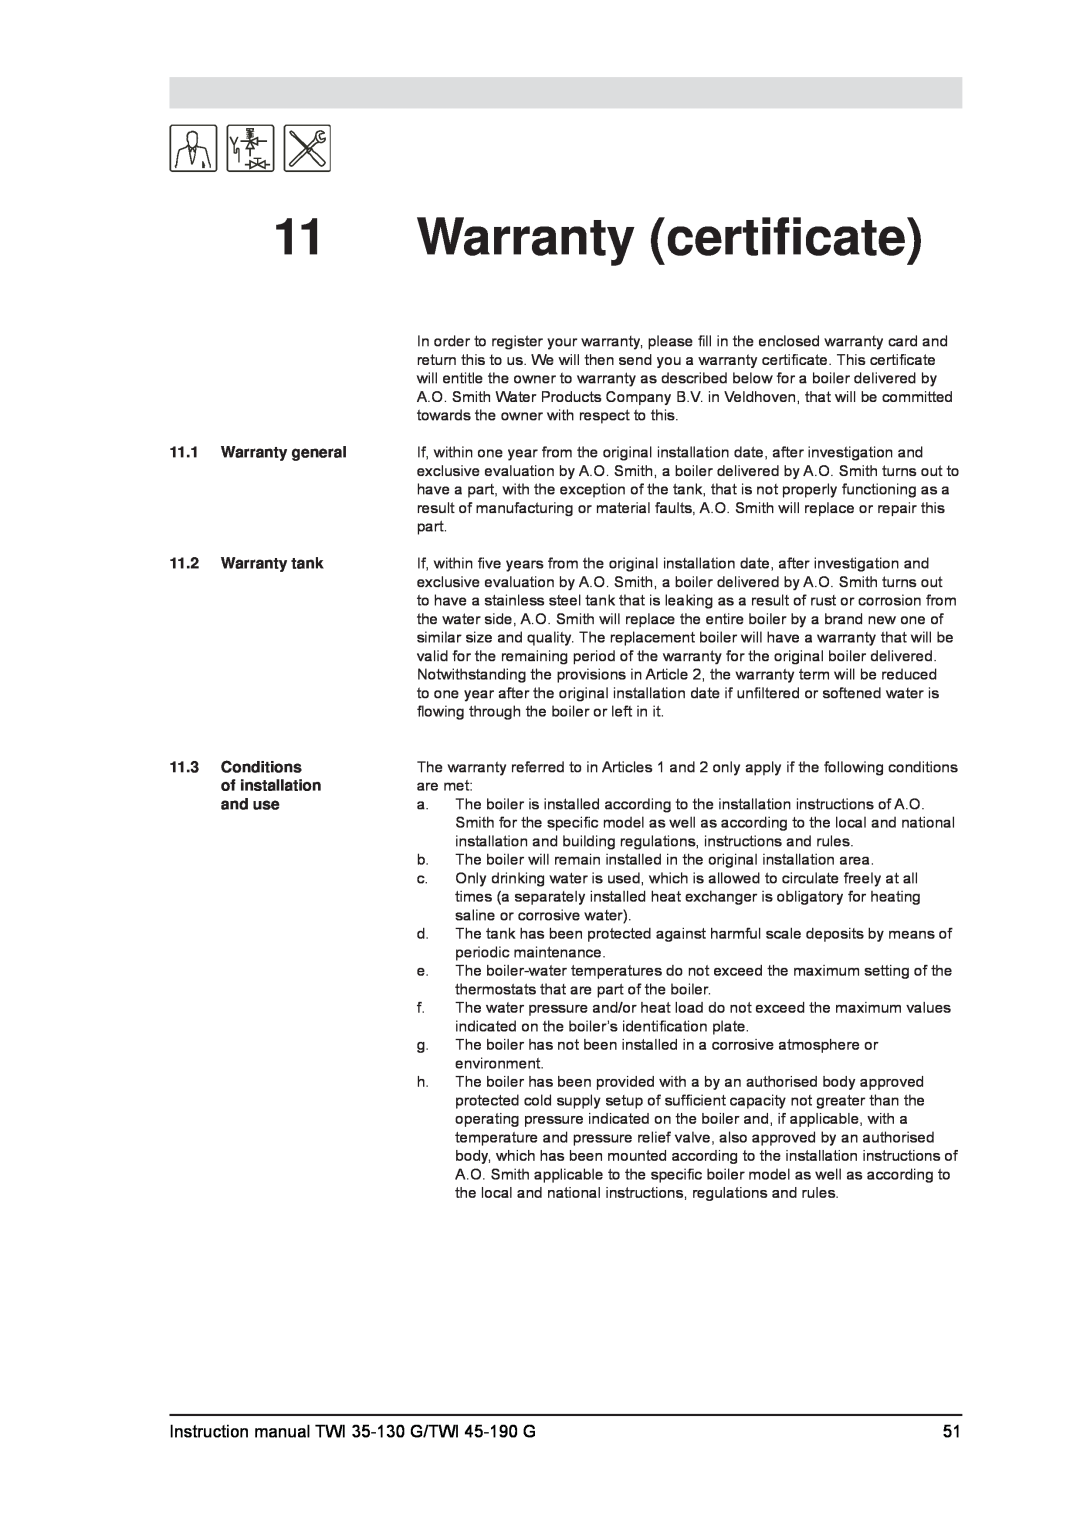 A.O. Smith TWI 35-130 Warranty certiﬁcate, 11.1, Warranty general, 11.2, Warranty tank, 11.3, Conditions, of installation 